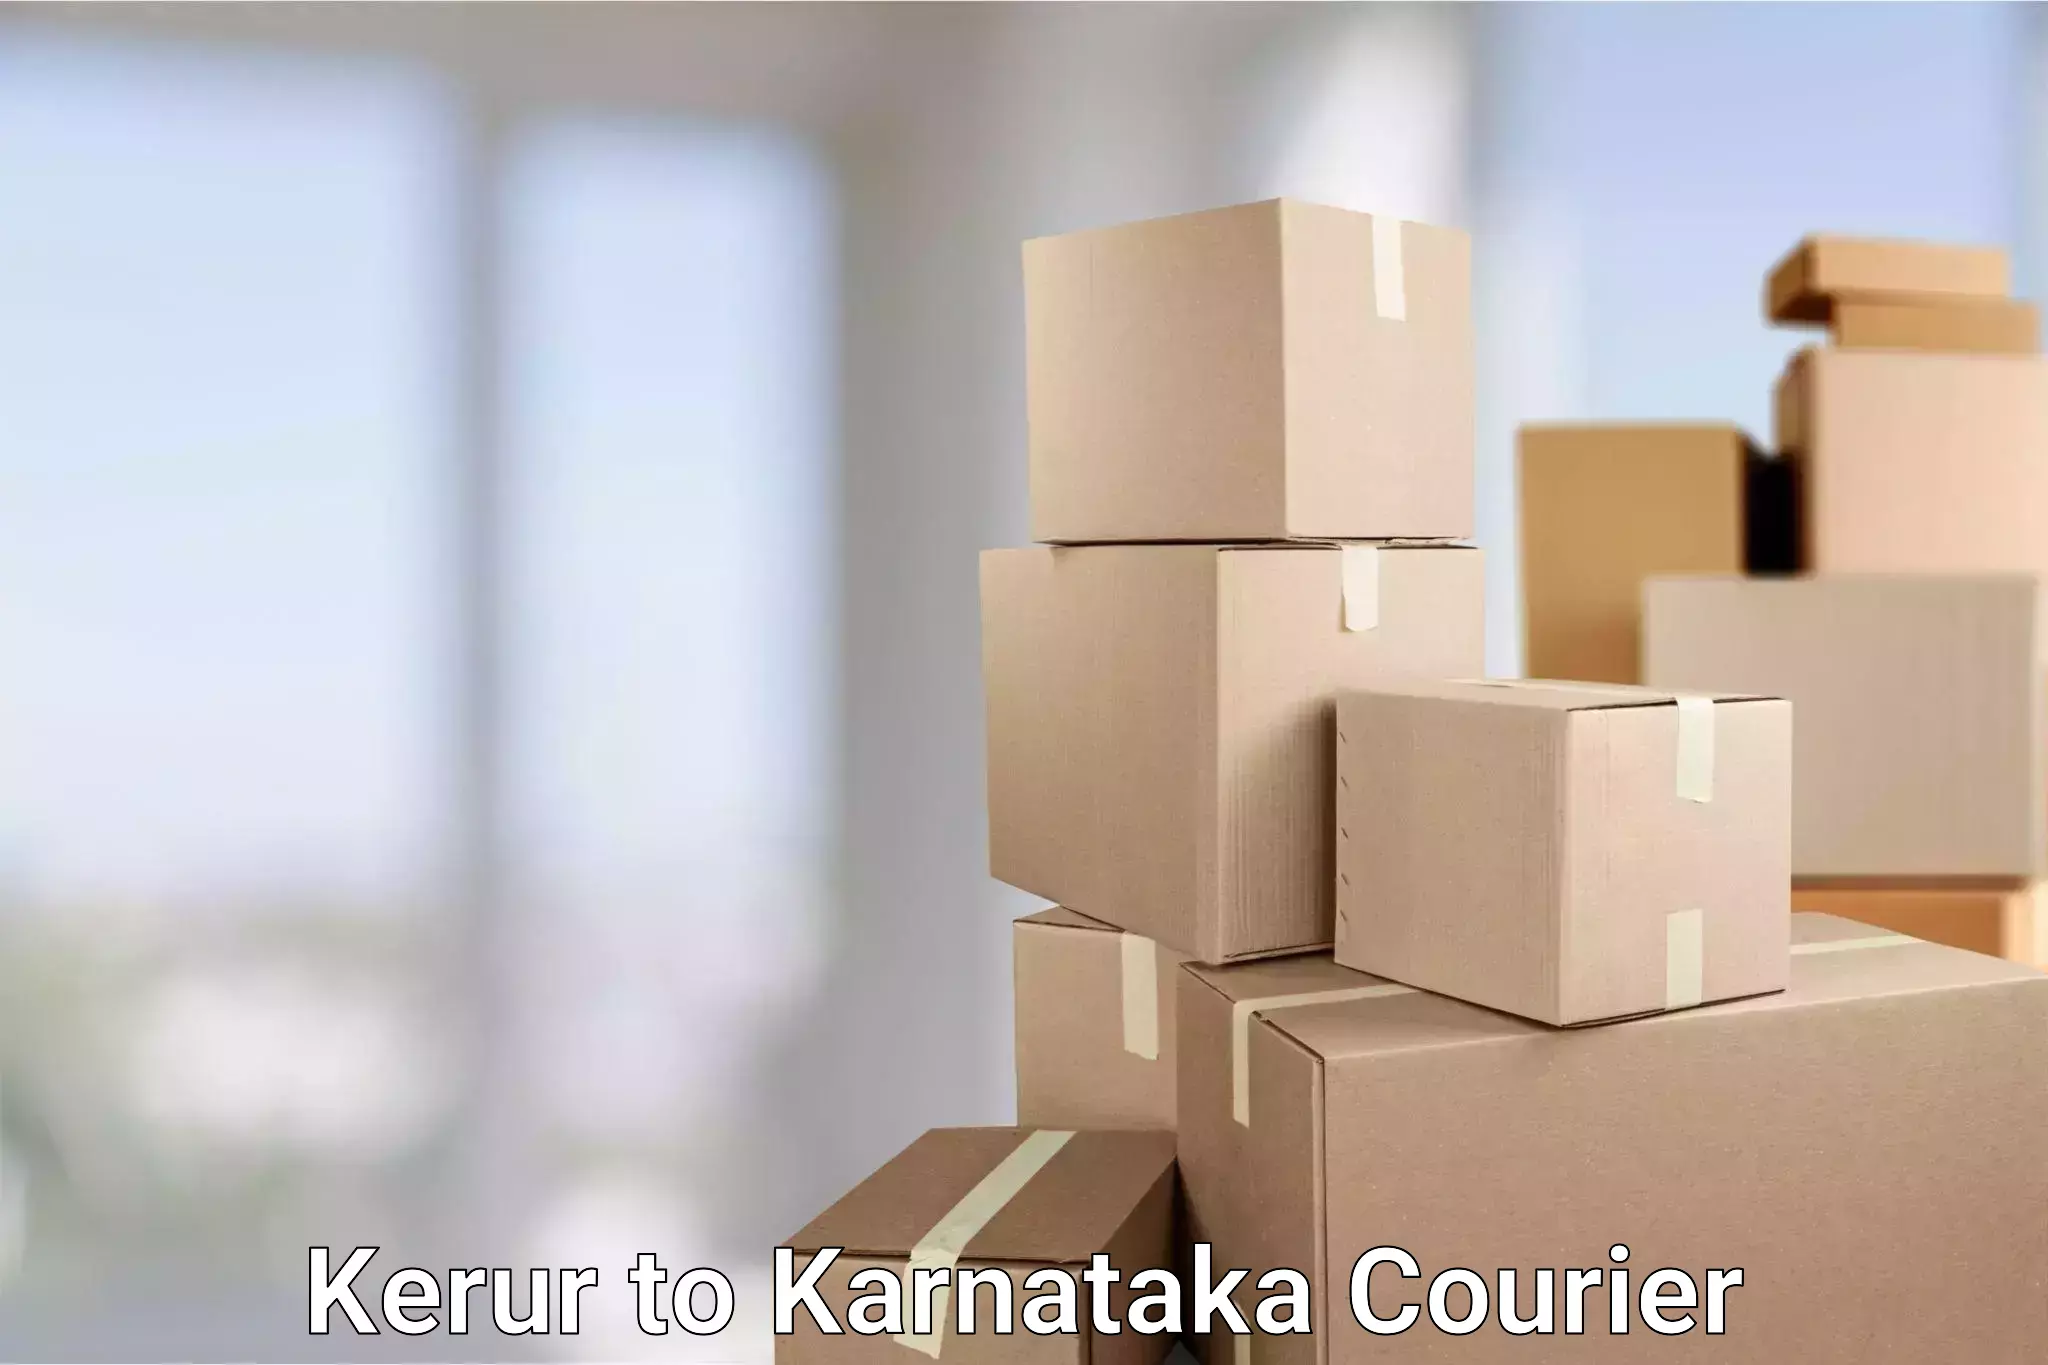 International courier networks Kerur to Mangalore Port